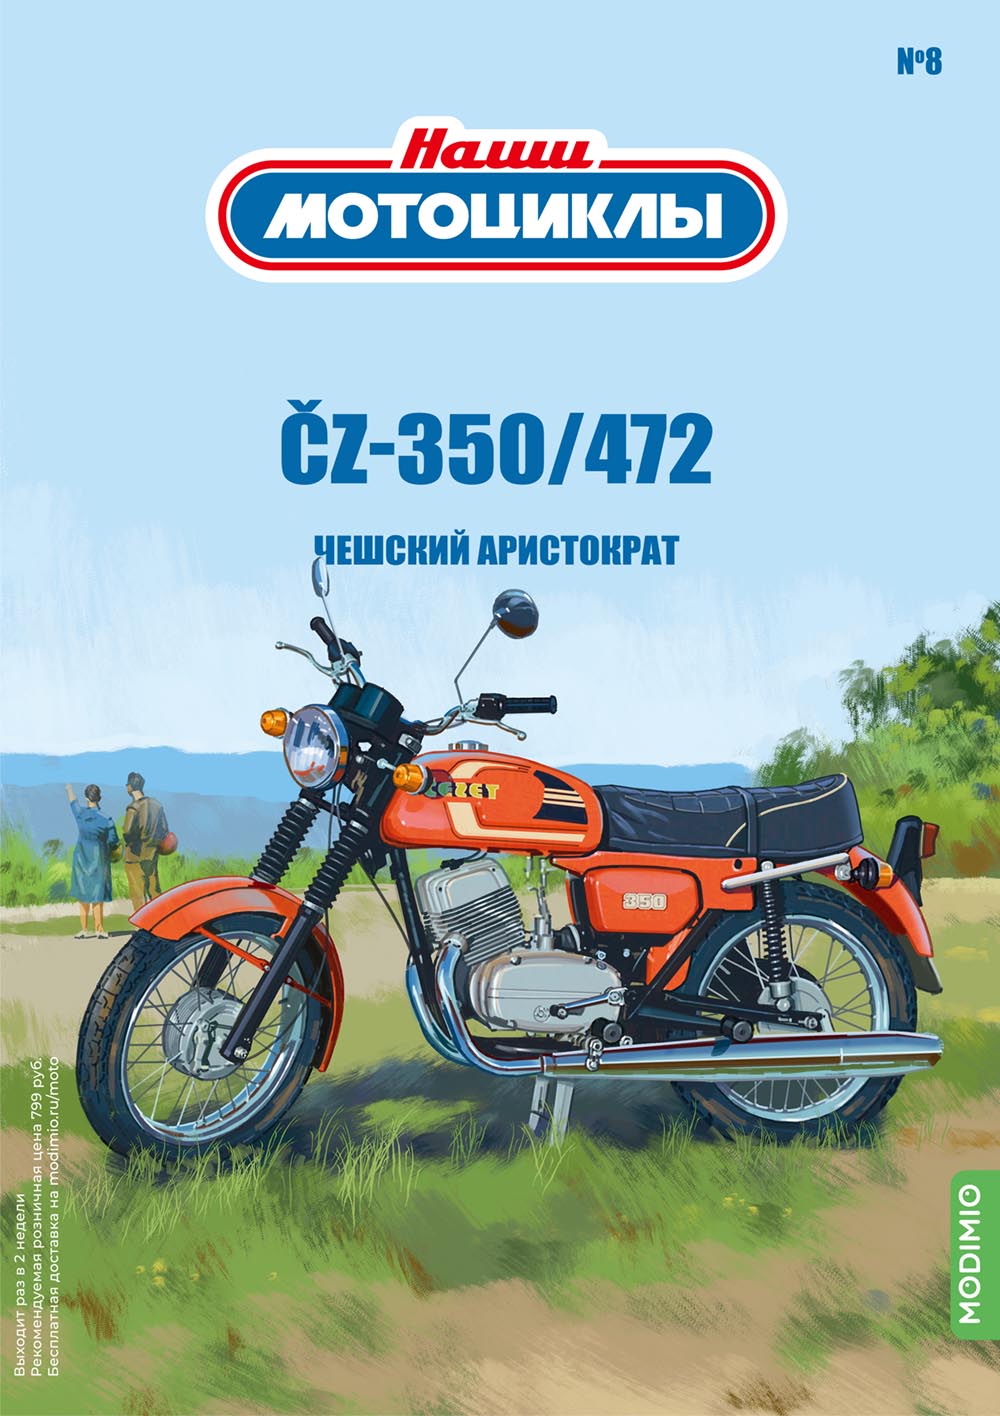 Наши мотоциклы №8, CZ-350/472